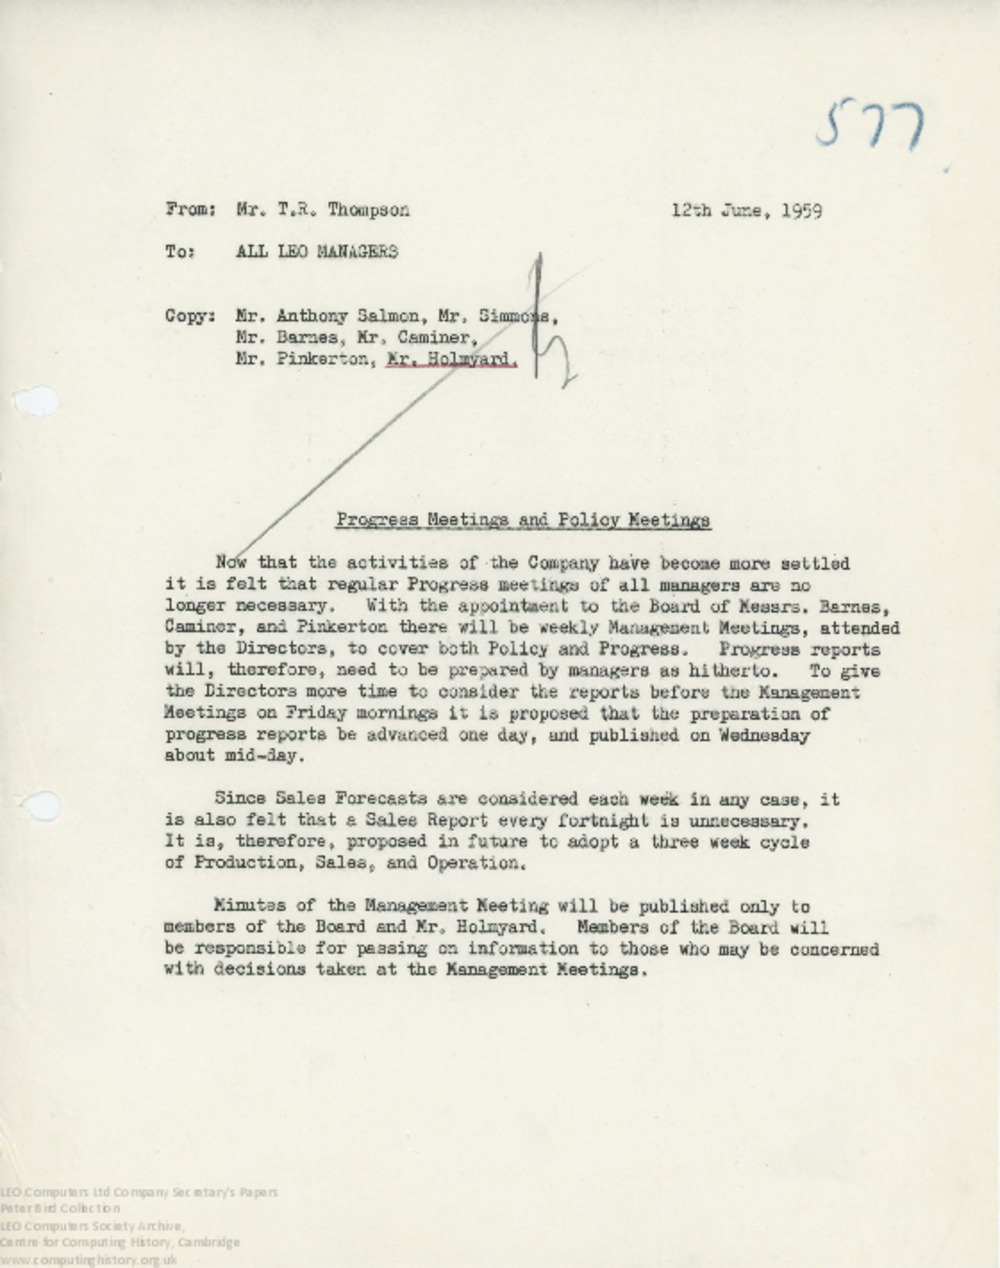 Article: 62464  Progress Meetings and Policy Meetings, 12 June 1959